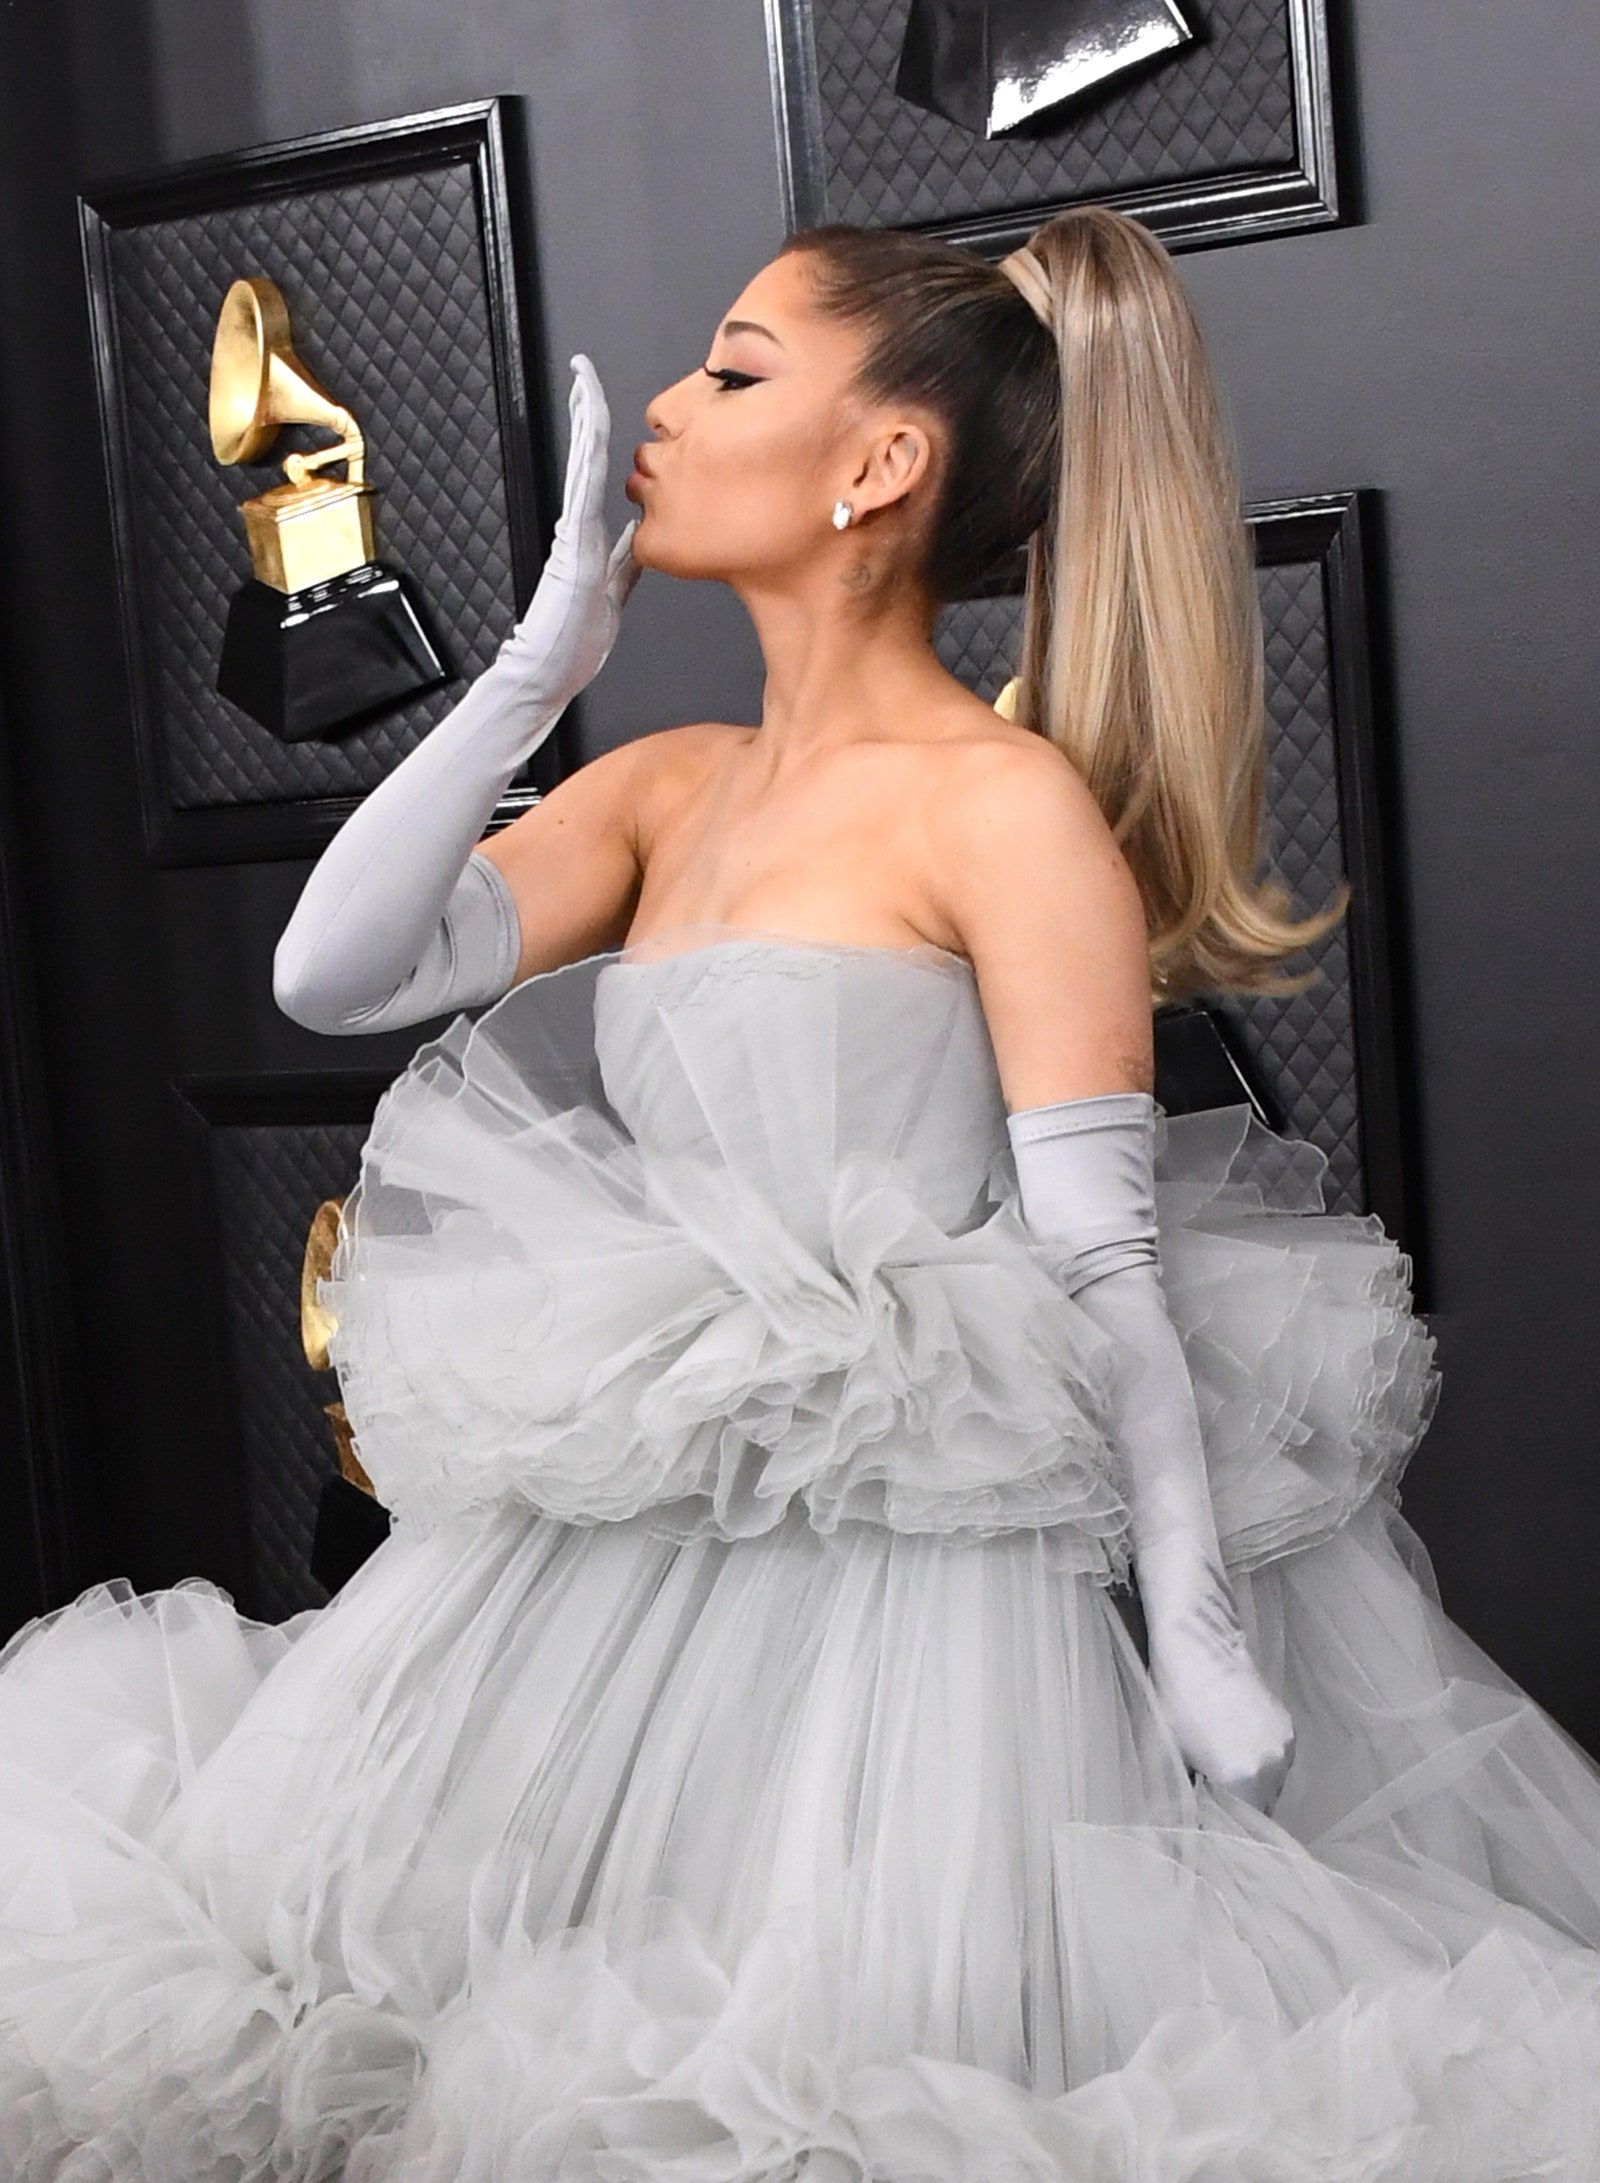 Ariana Grande's Grammys Dress Isglamour.com